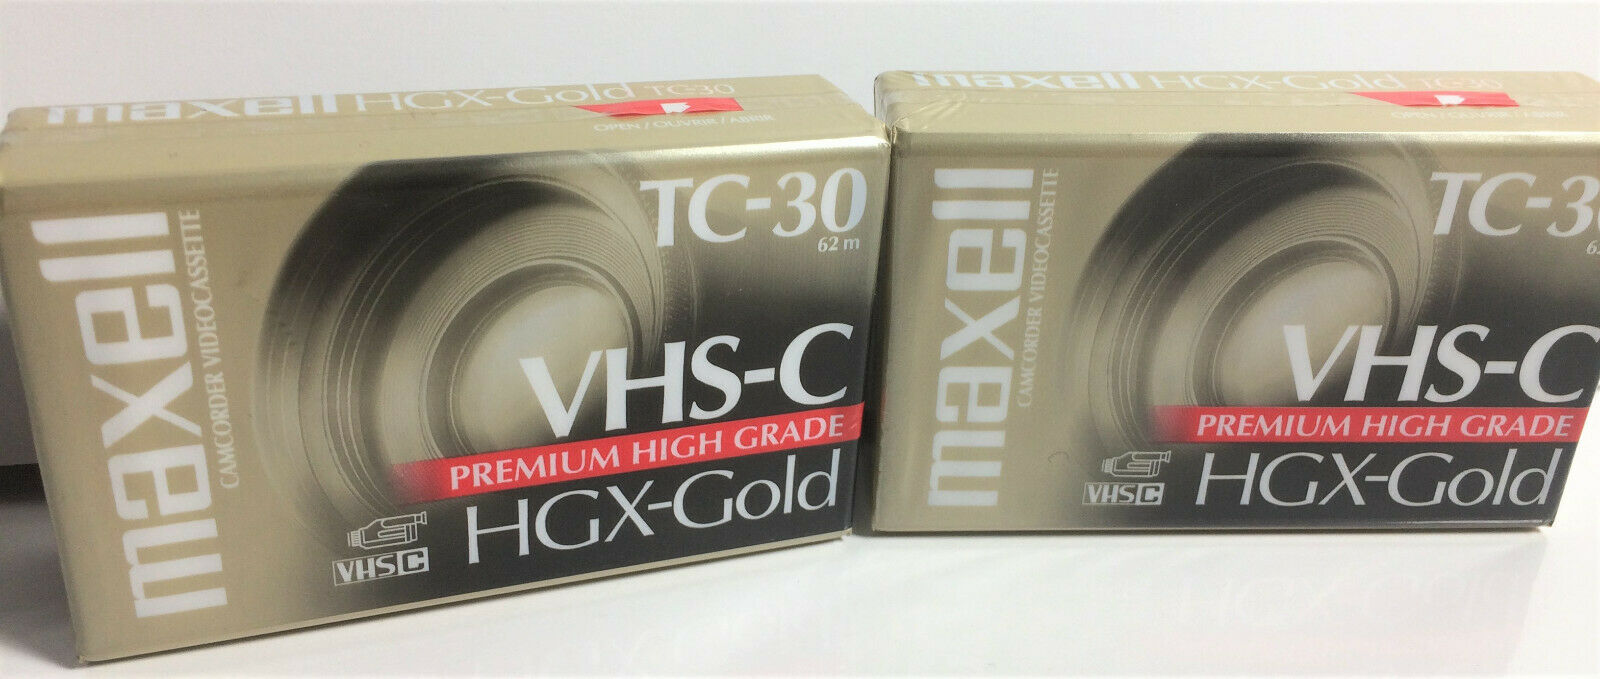 Maxel TC-30 VHS-C Premium High Grade HGX-Gold Lot of 2 Camcorder Tapes